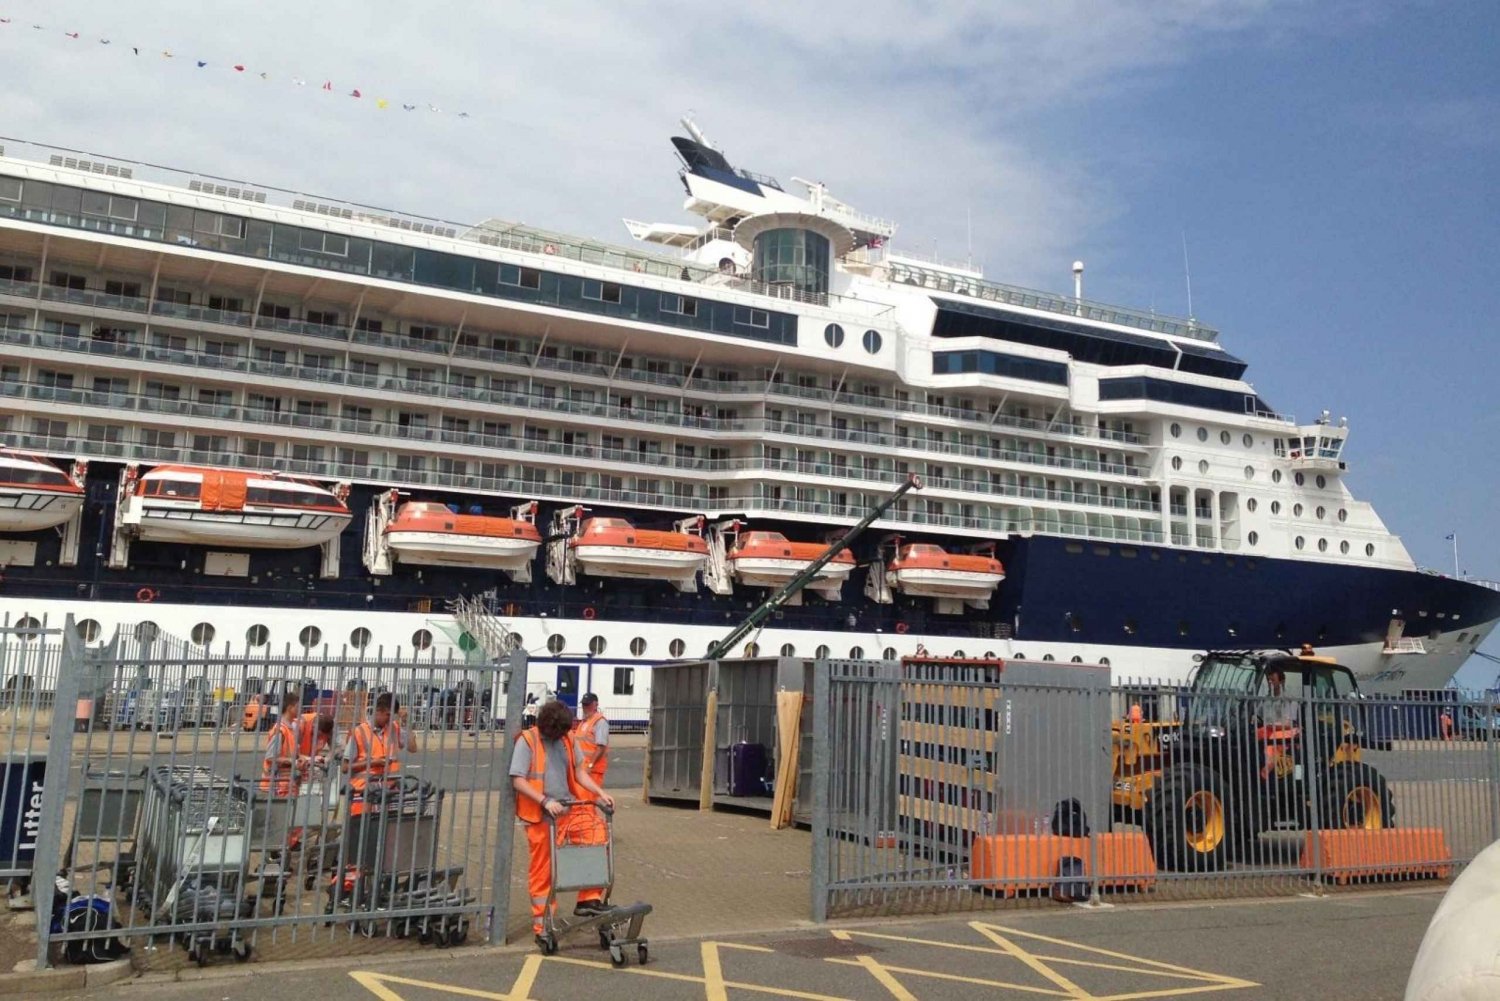 Lontoosta: Southampton City Cruise Terminal